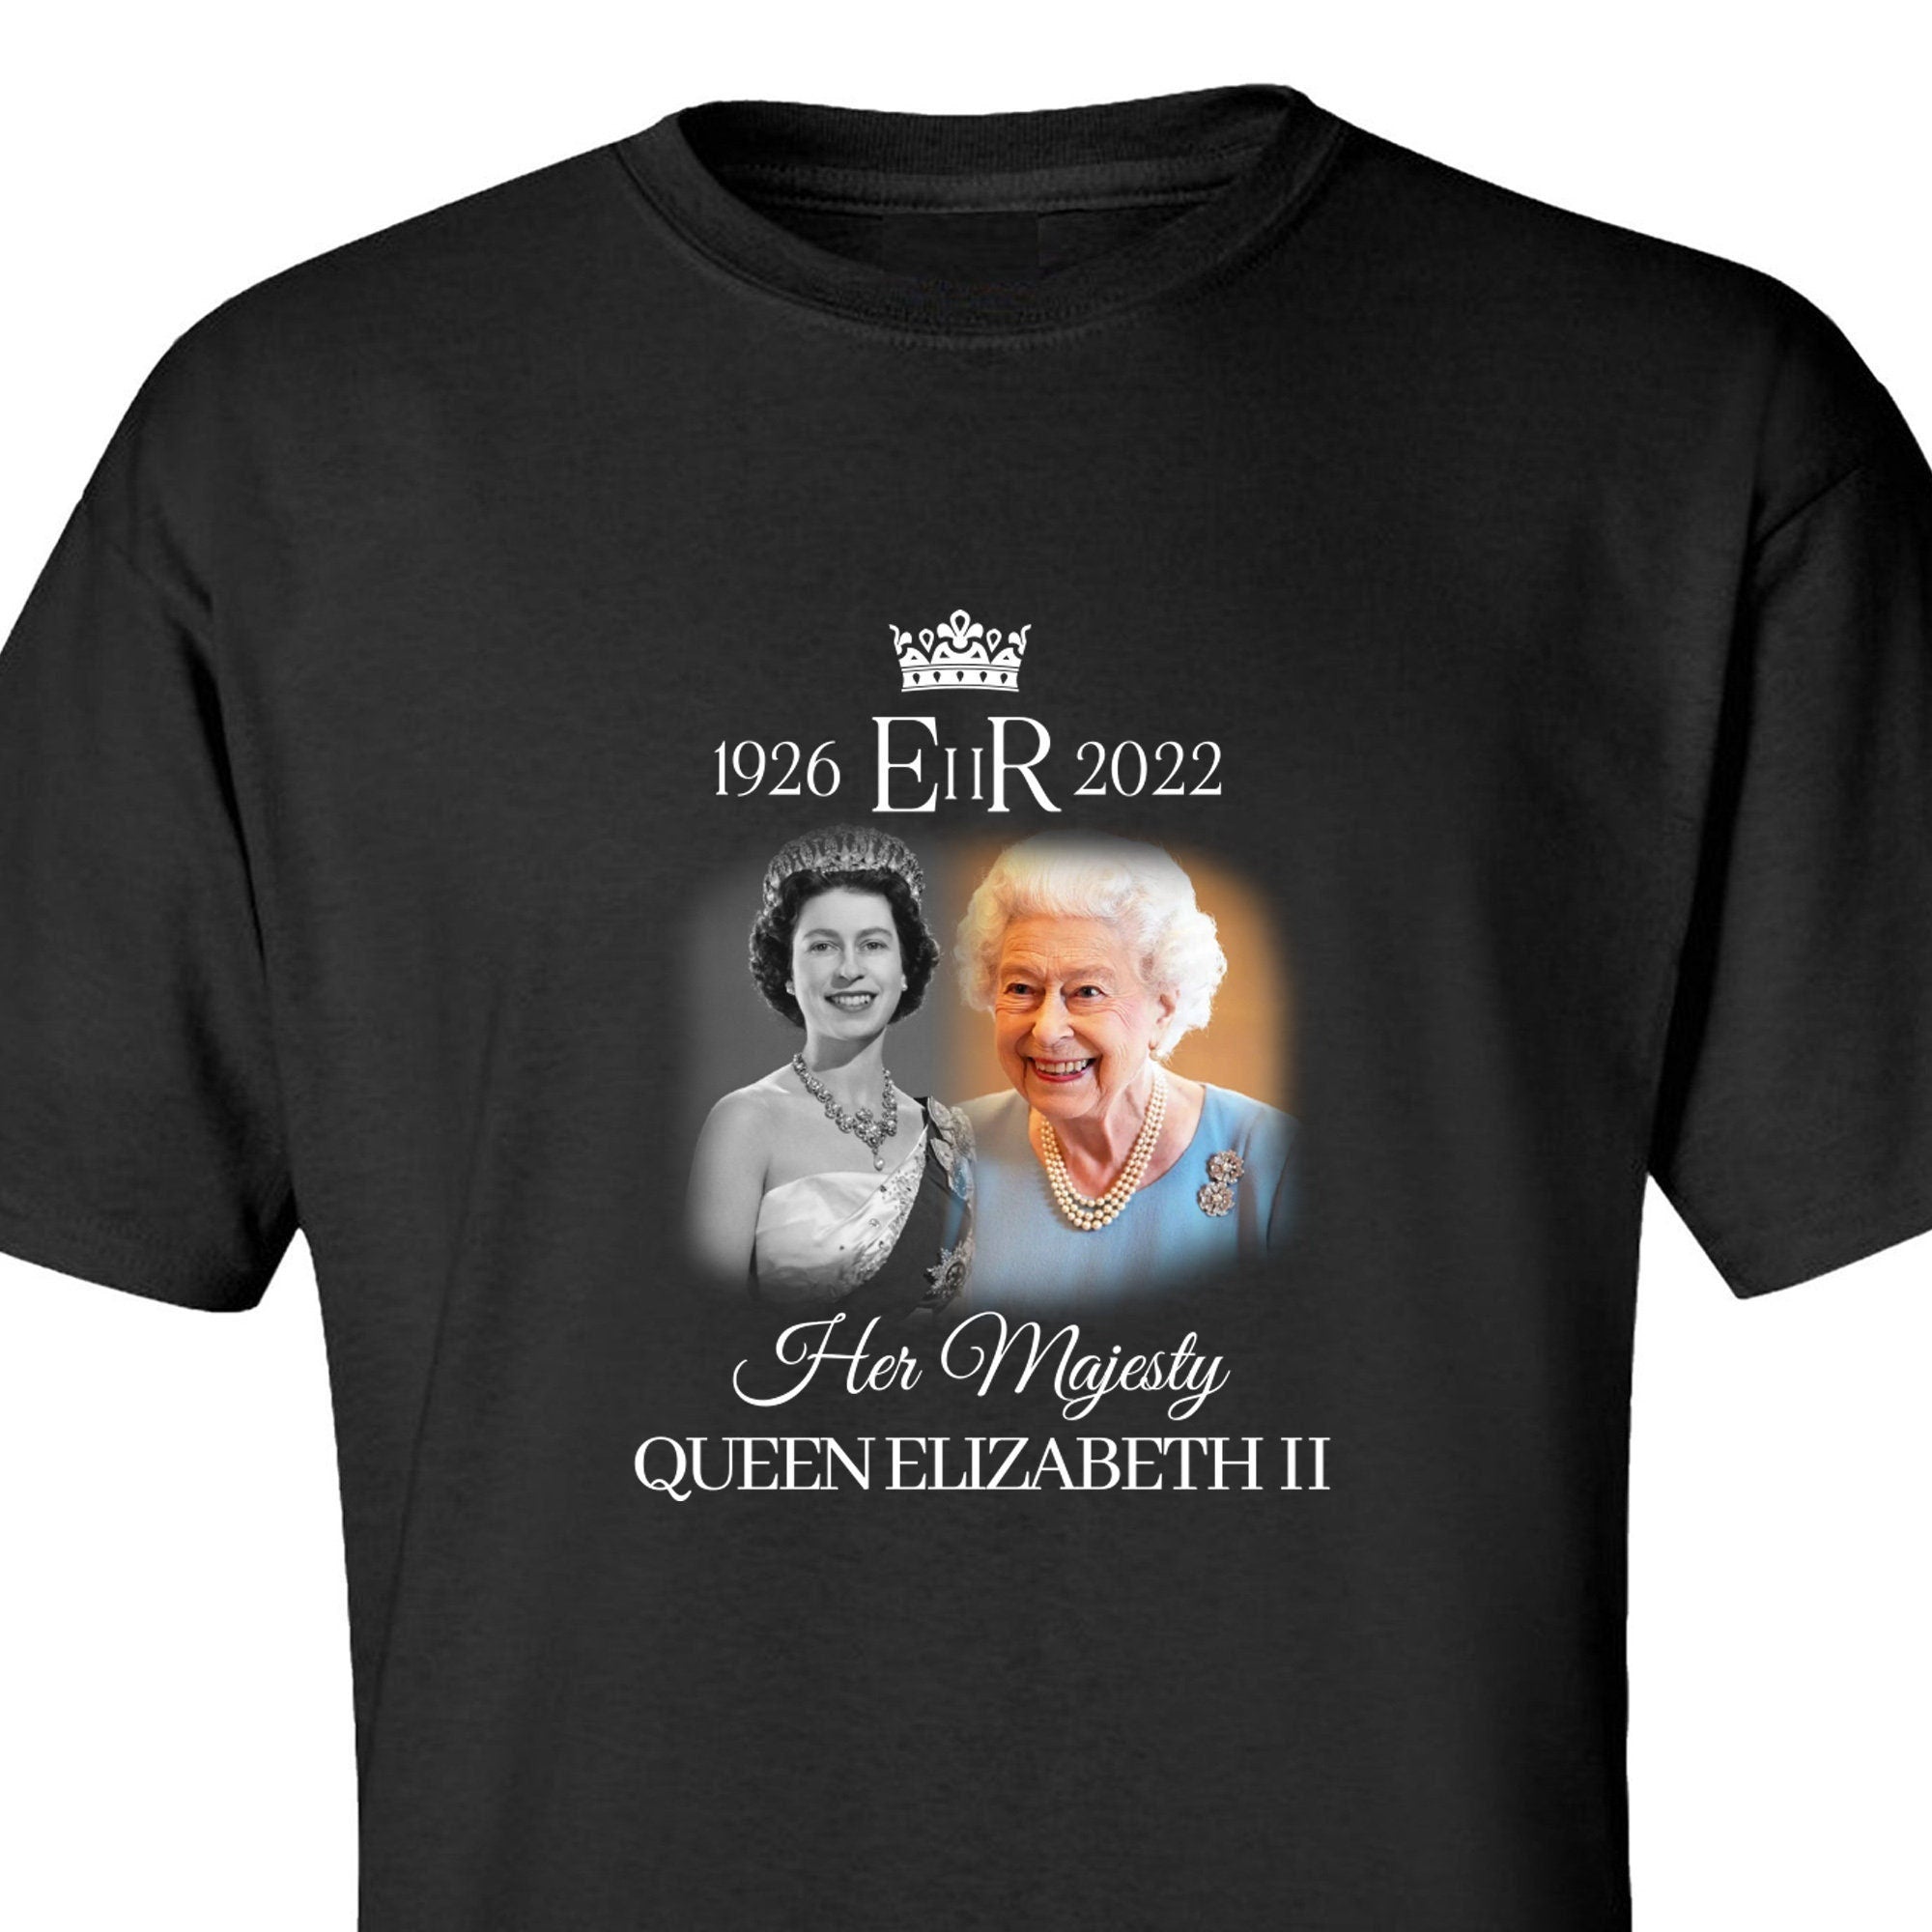 The Queen's 1926-2022 T-shirt / ADULT KIDS BABY sizes / Her Majesty Queen Elizabeth 2 photo tshirt